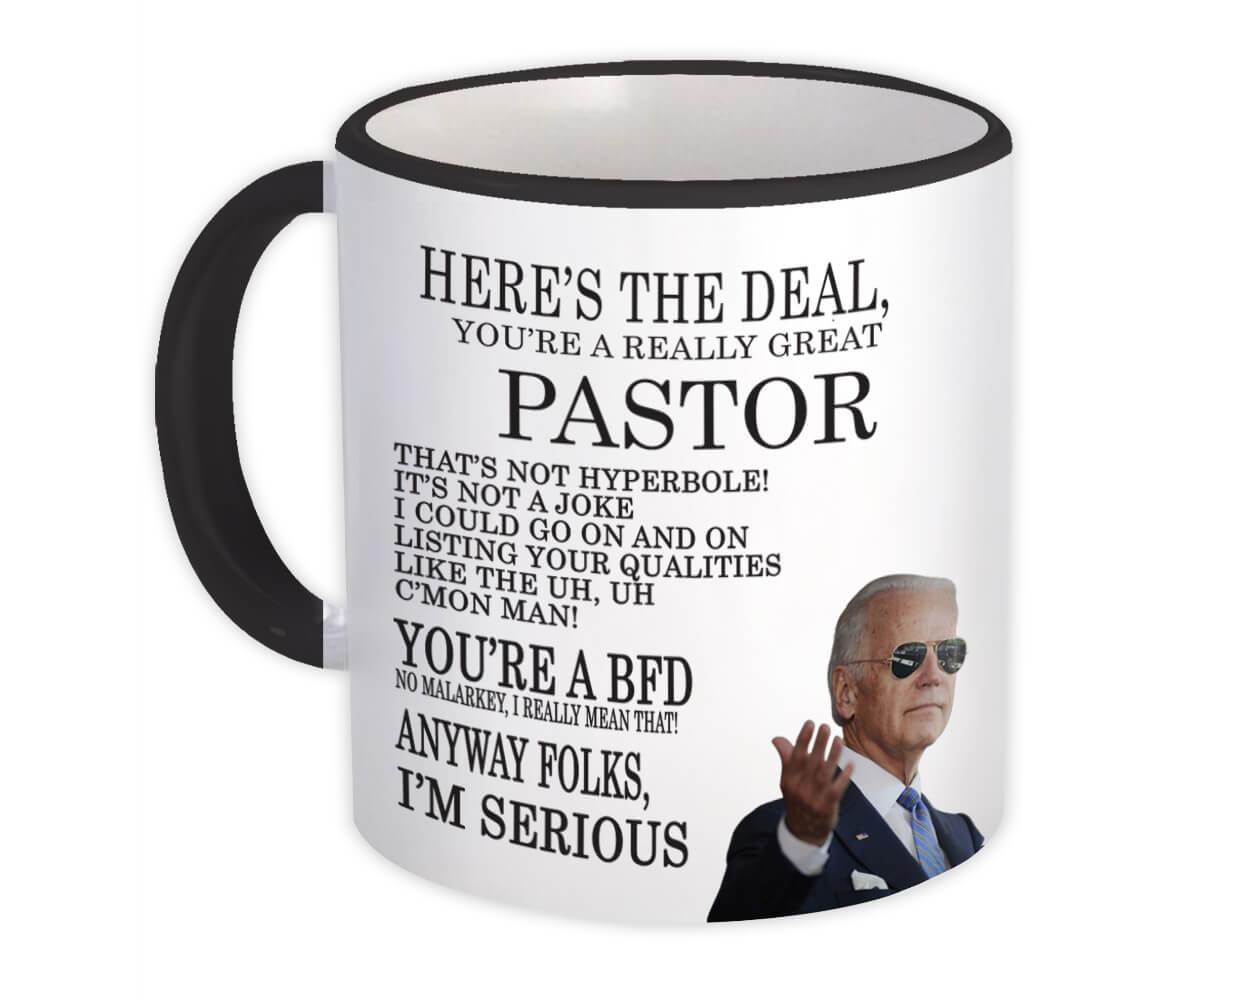  Priest Mug Coffee Joke Gag Cup - Definition Meaning